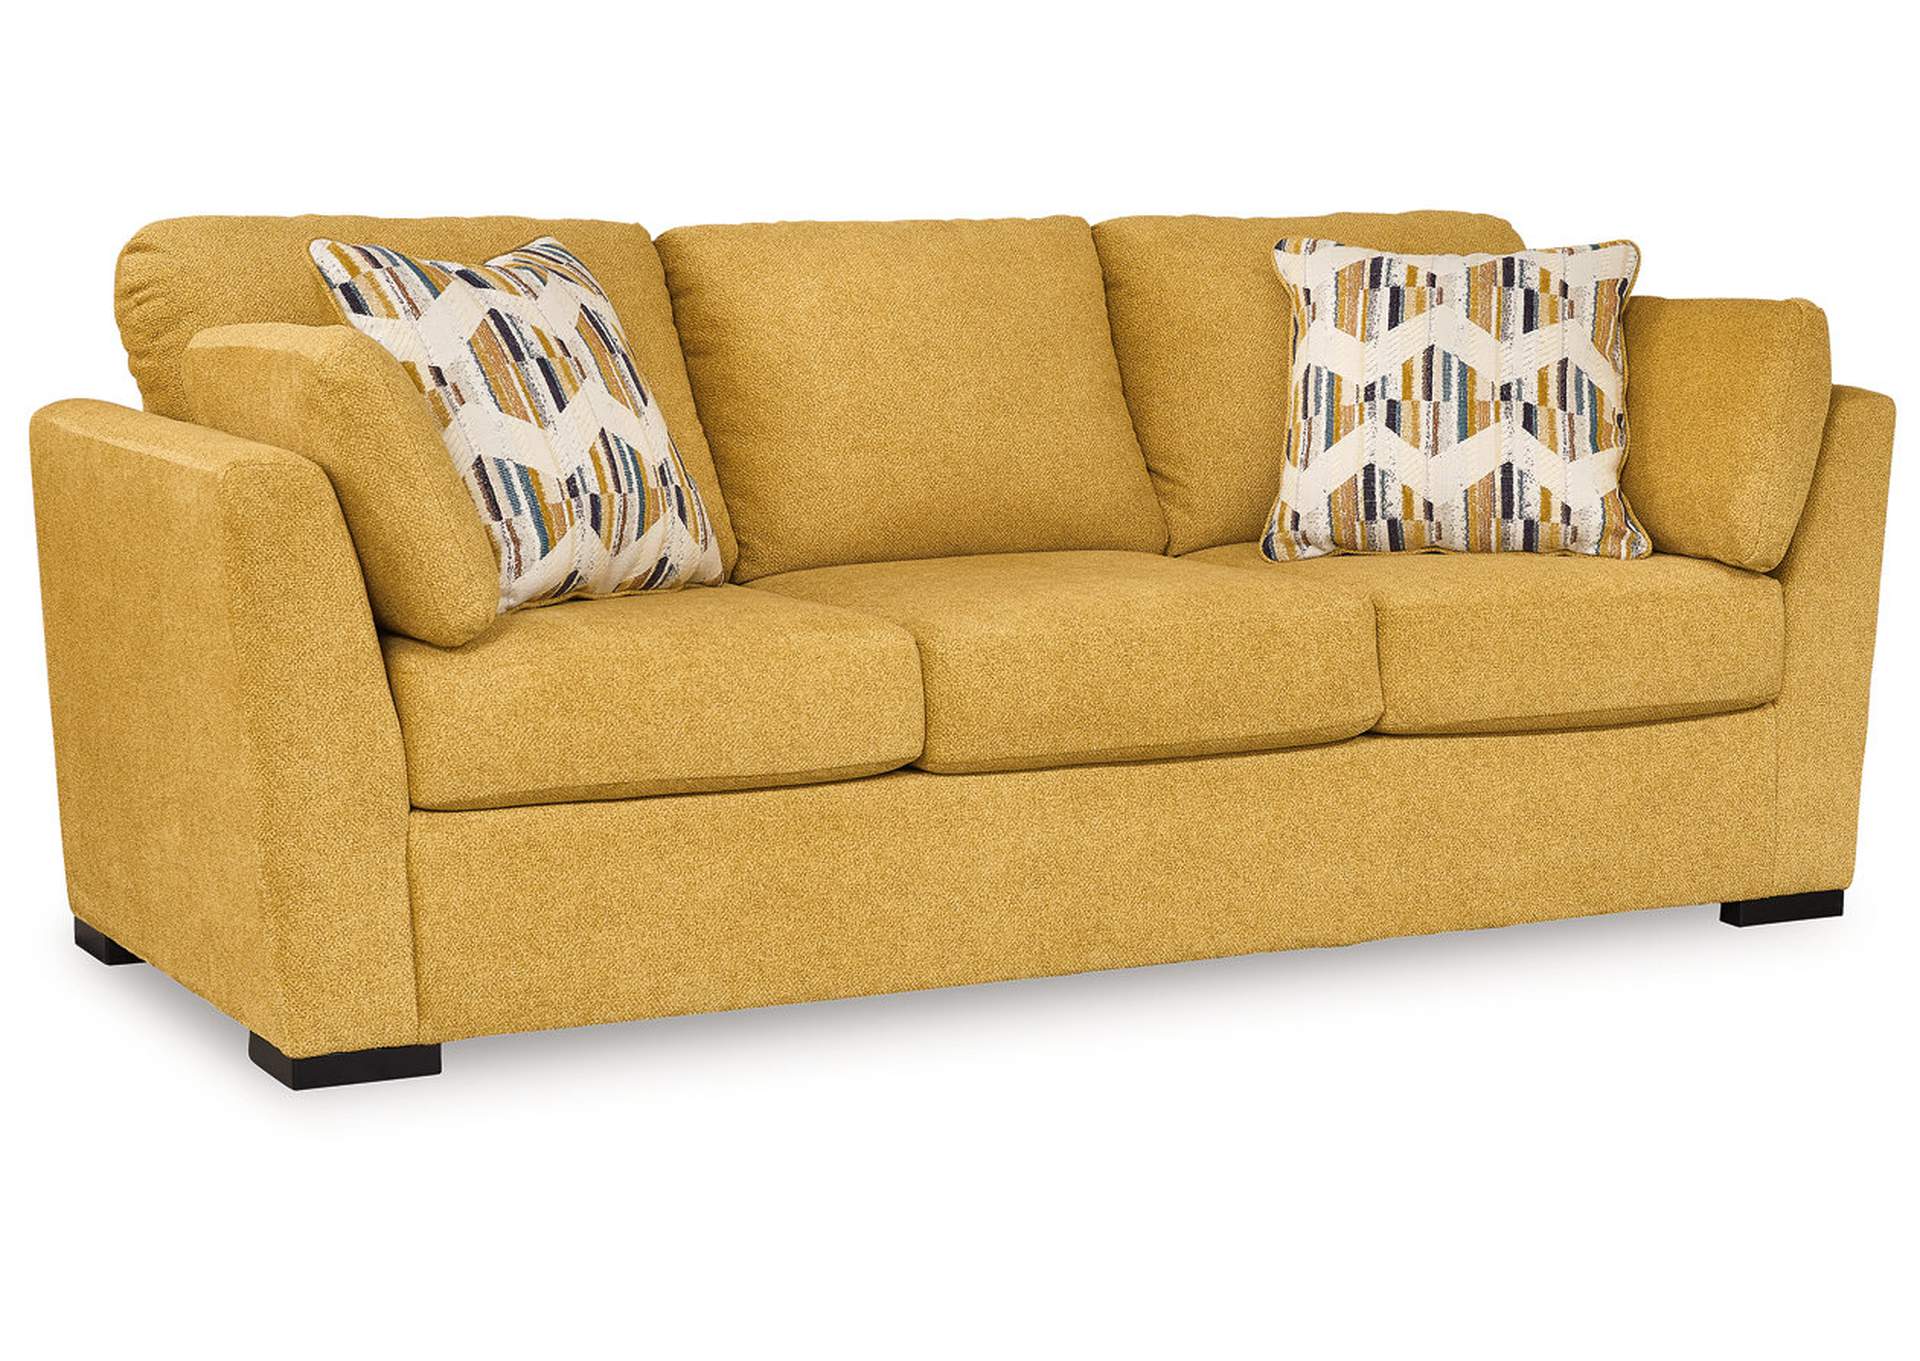 Keerwick Queen Sofa Sleeper,Signature Design By Ashley